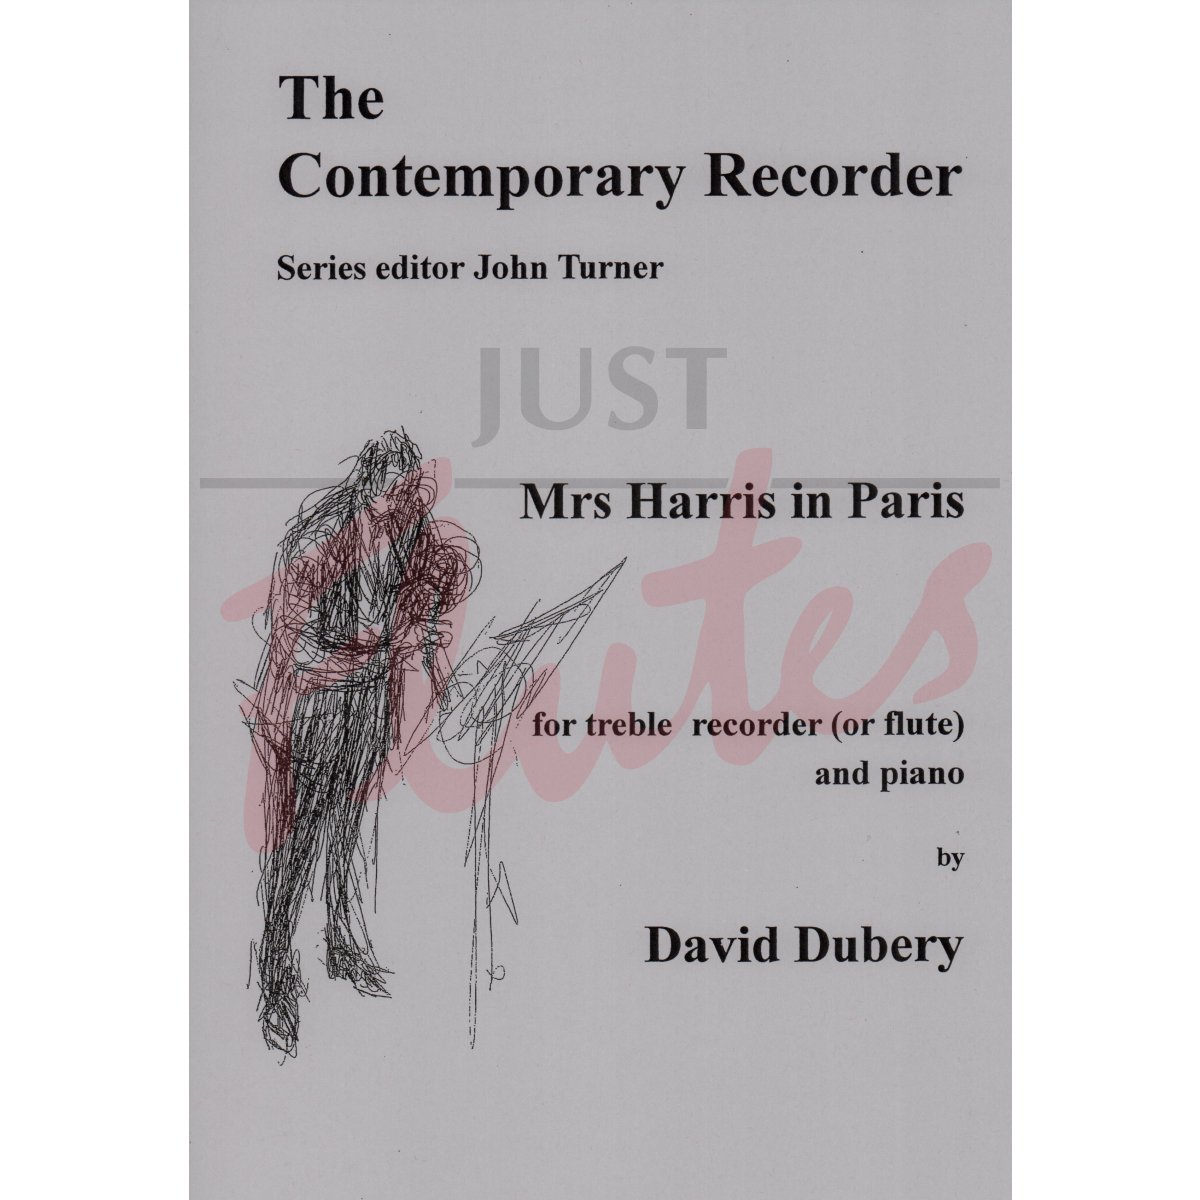 The Contemporary Recorder - Mrs Harris in Paris